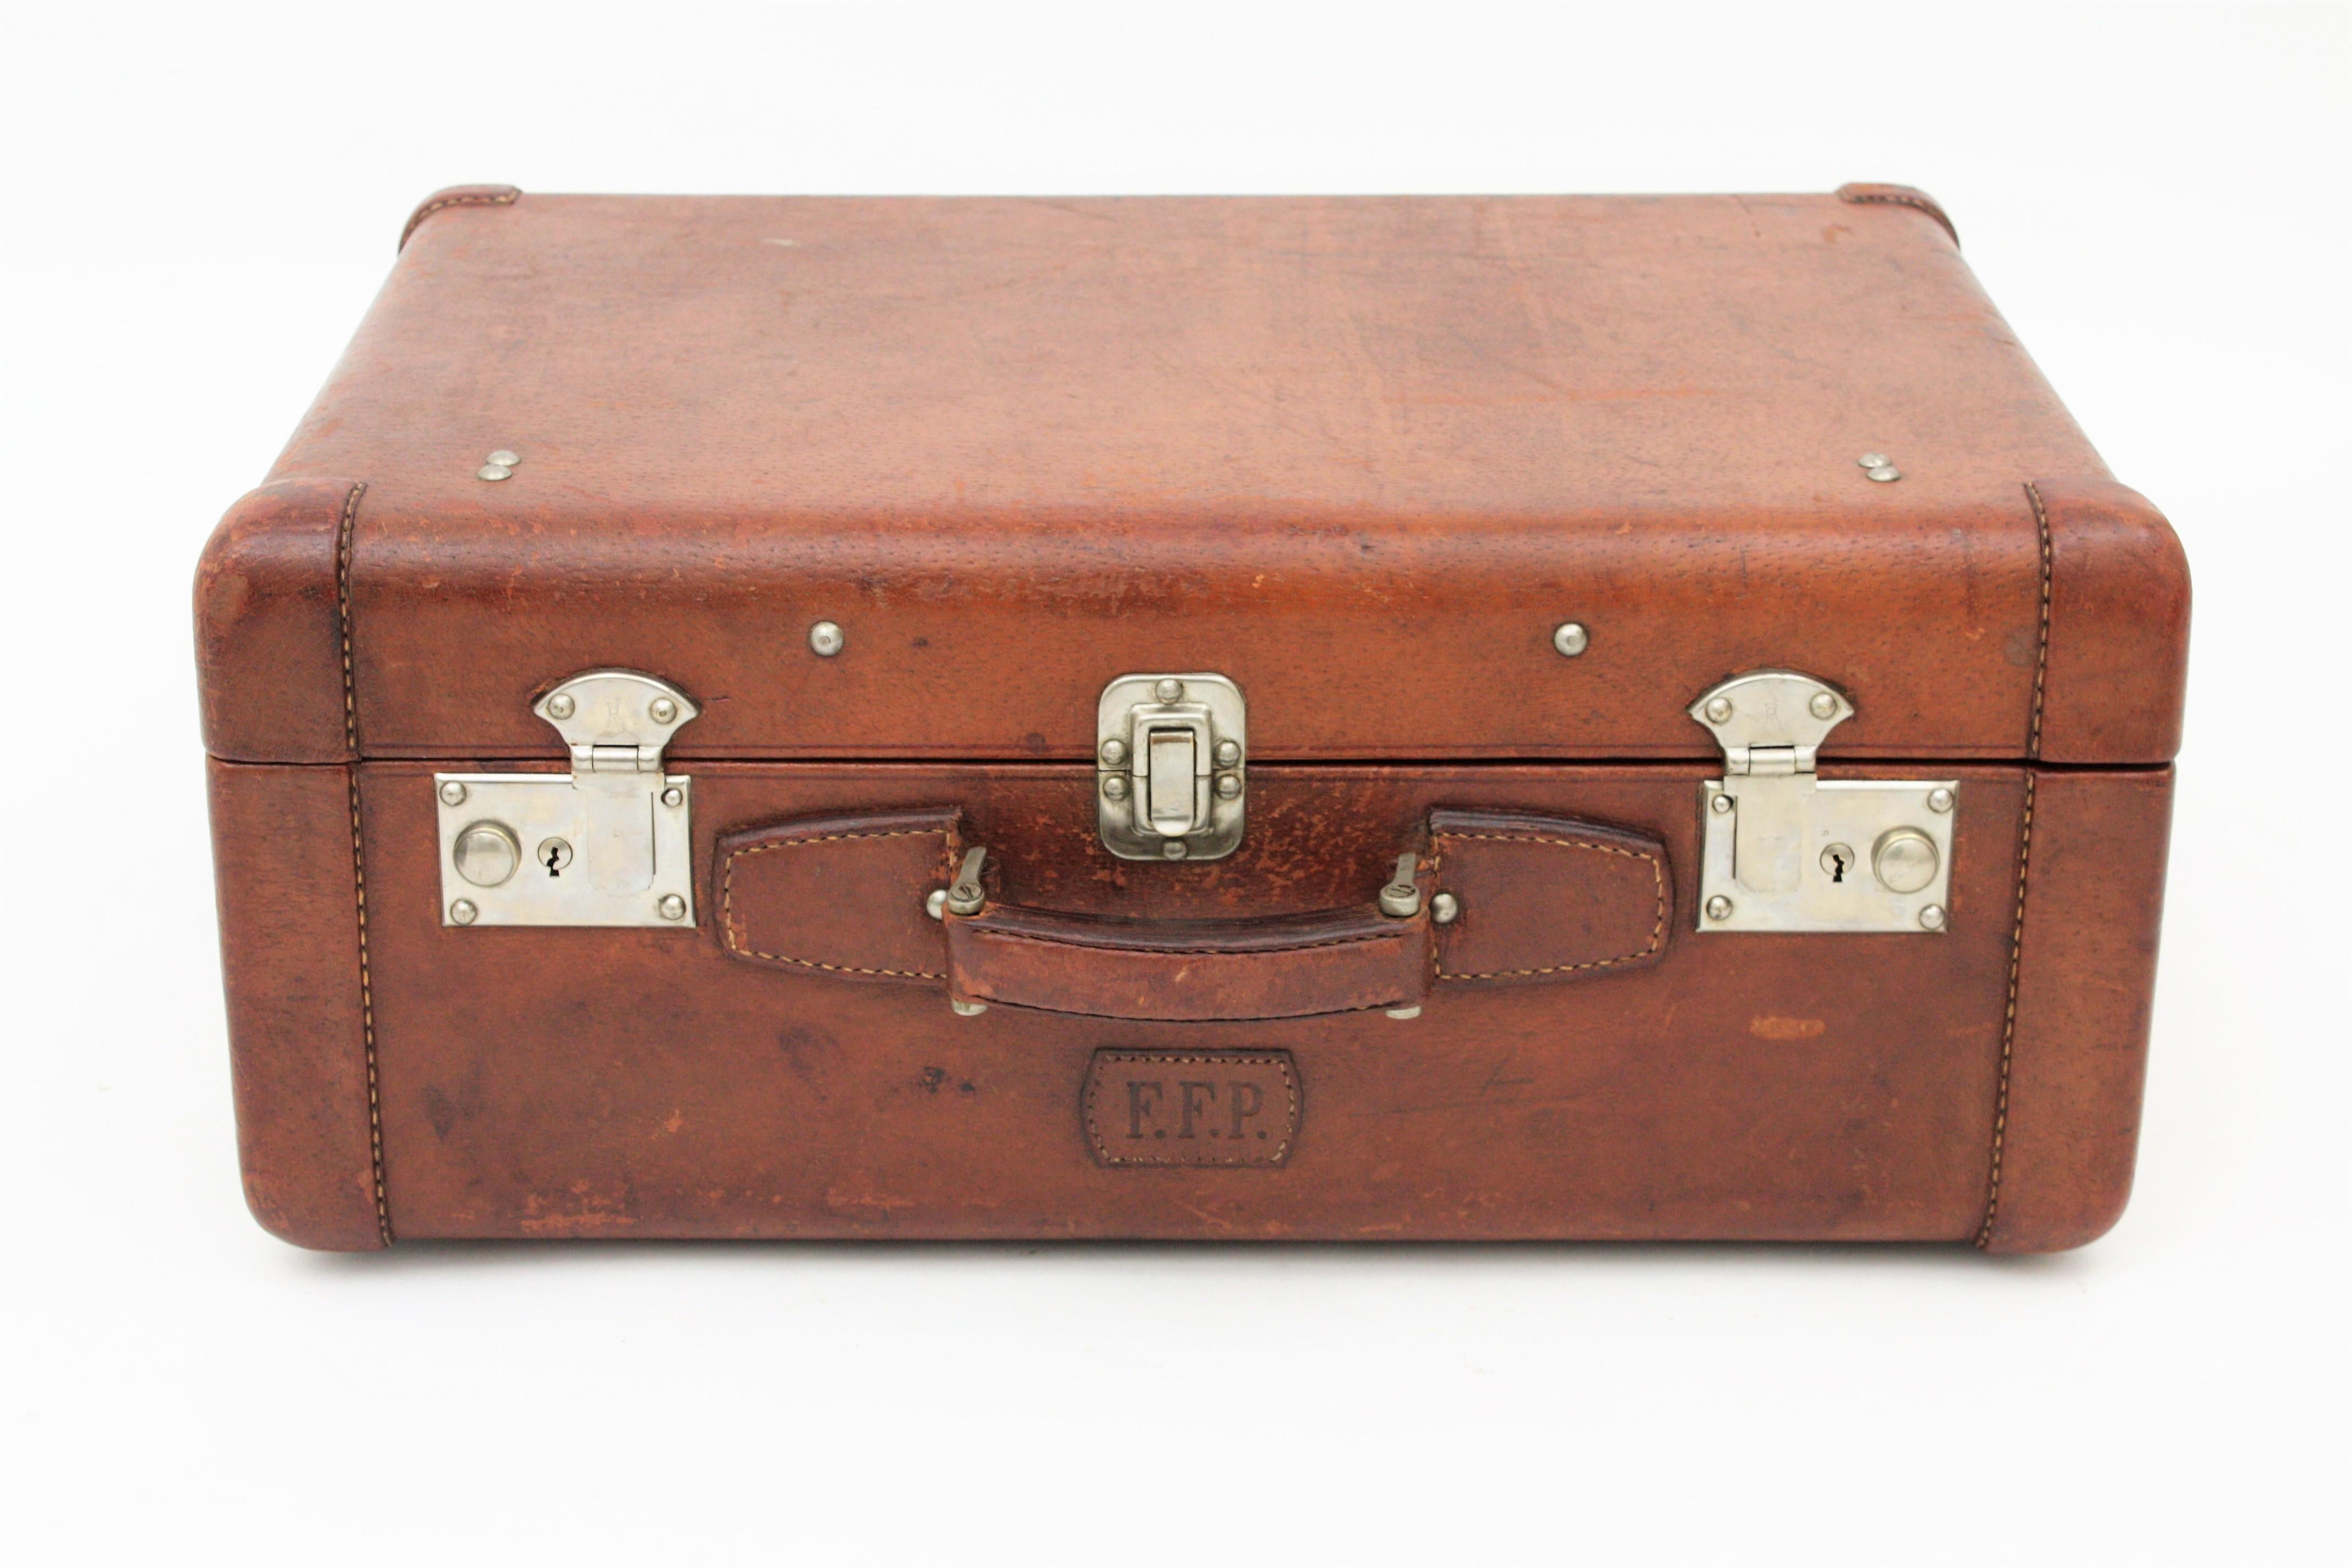 1930s suitcase